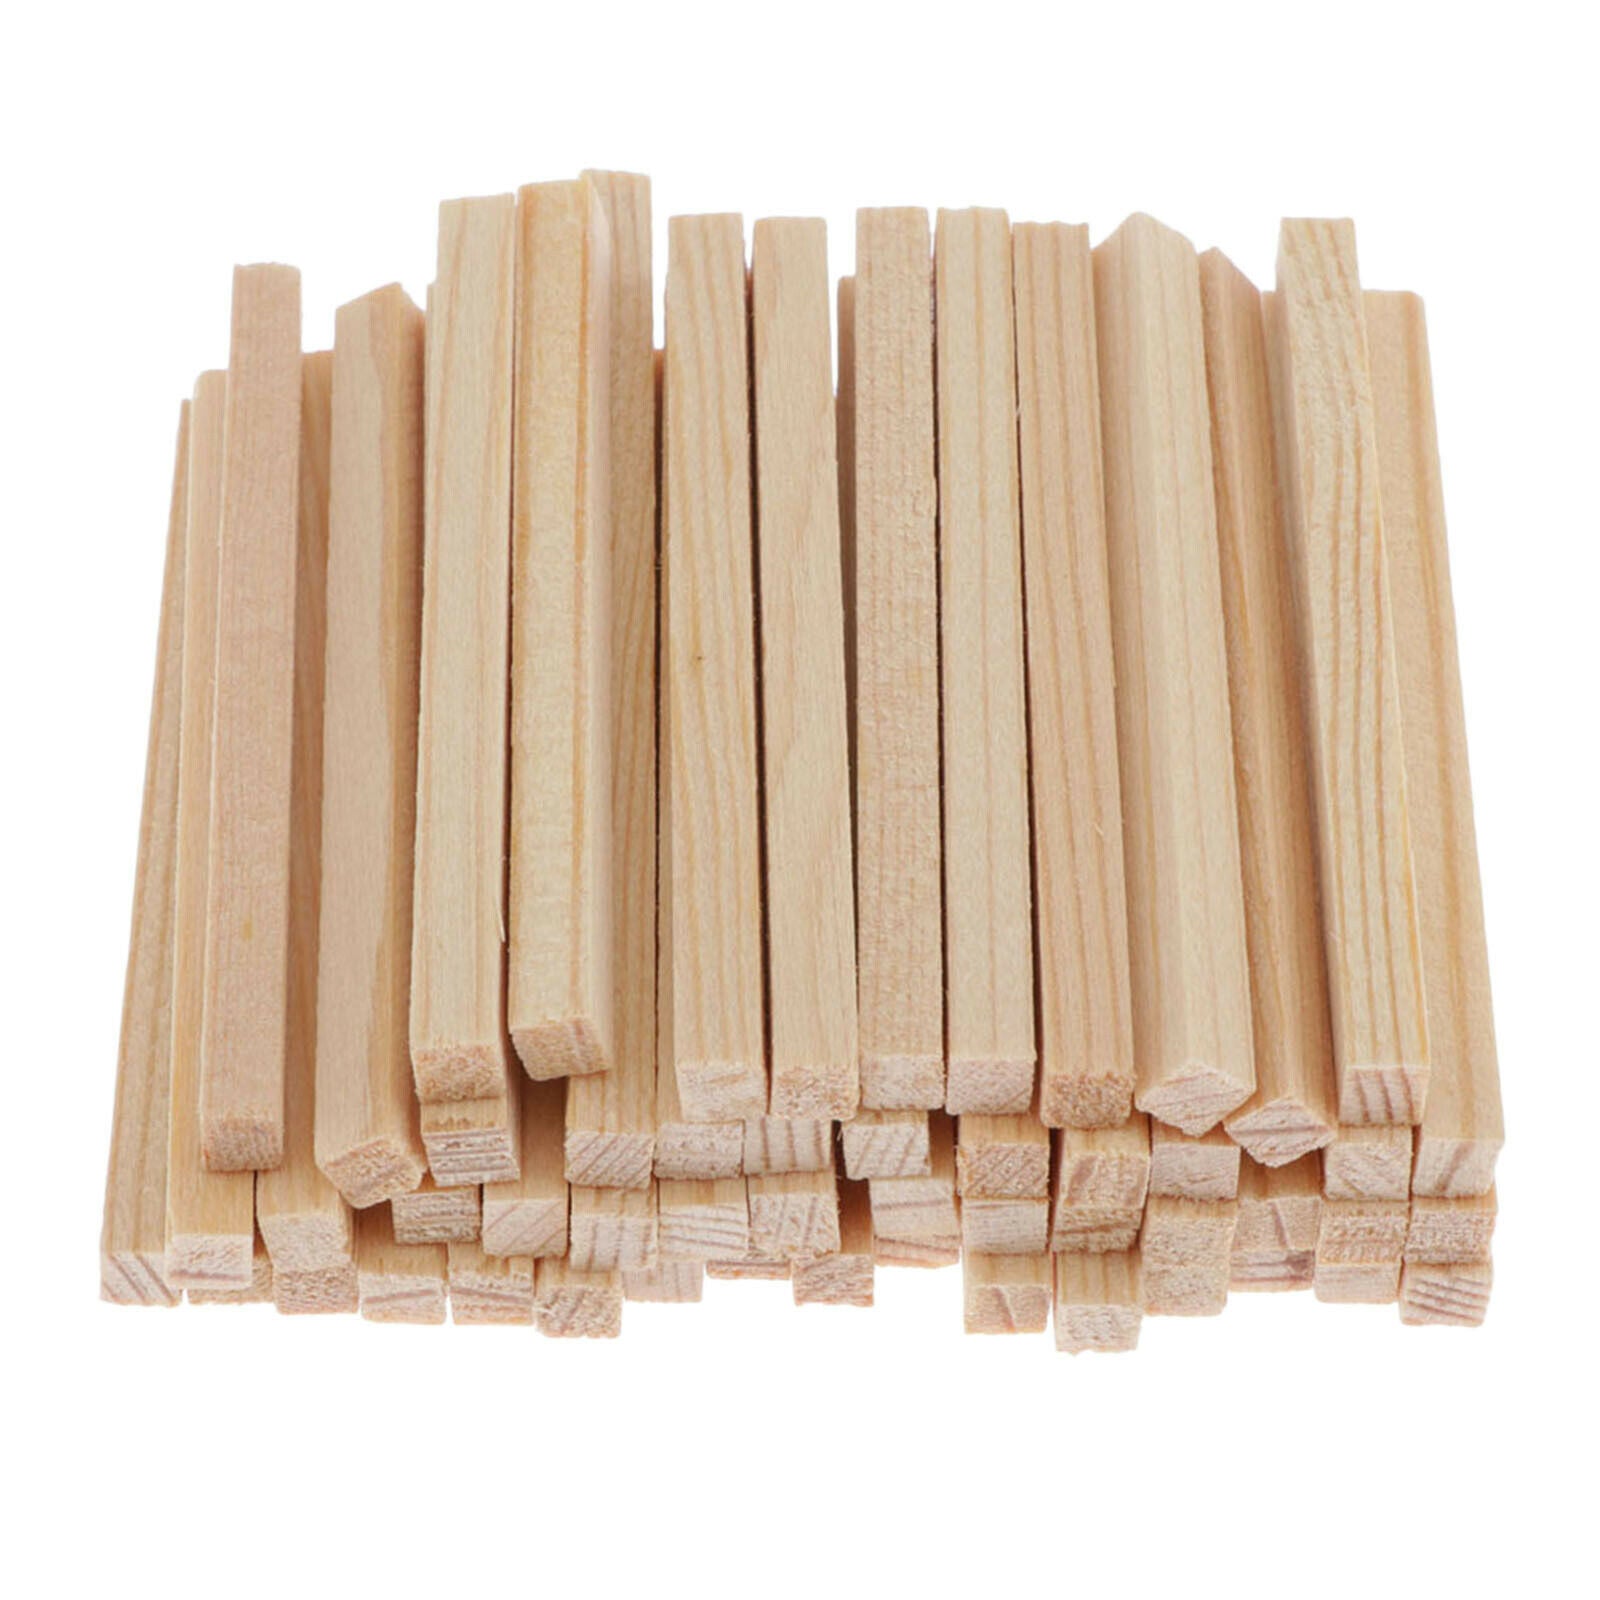 100pcs/set Unfinished Wood Pieces Wooden Sticks Poles DIY Projects Craft